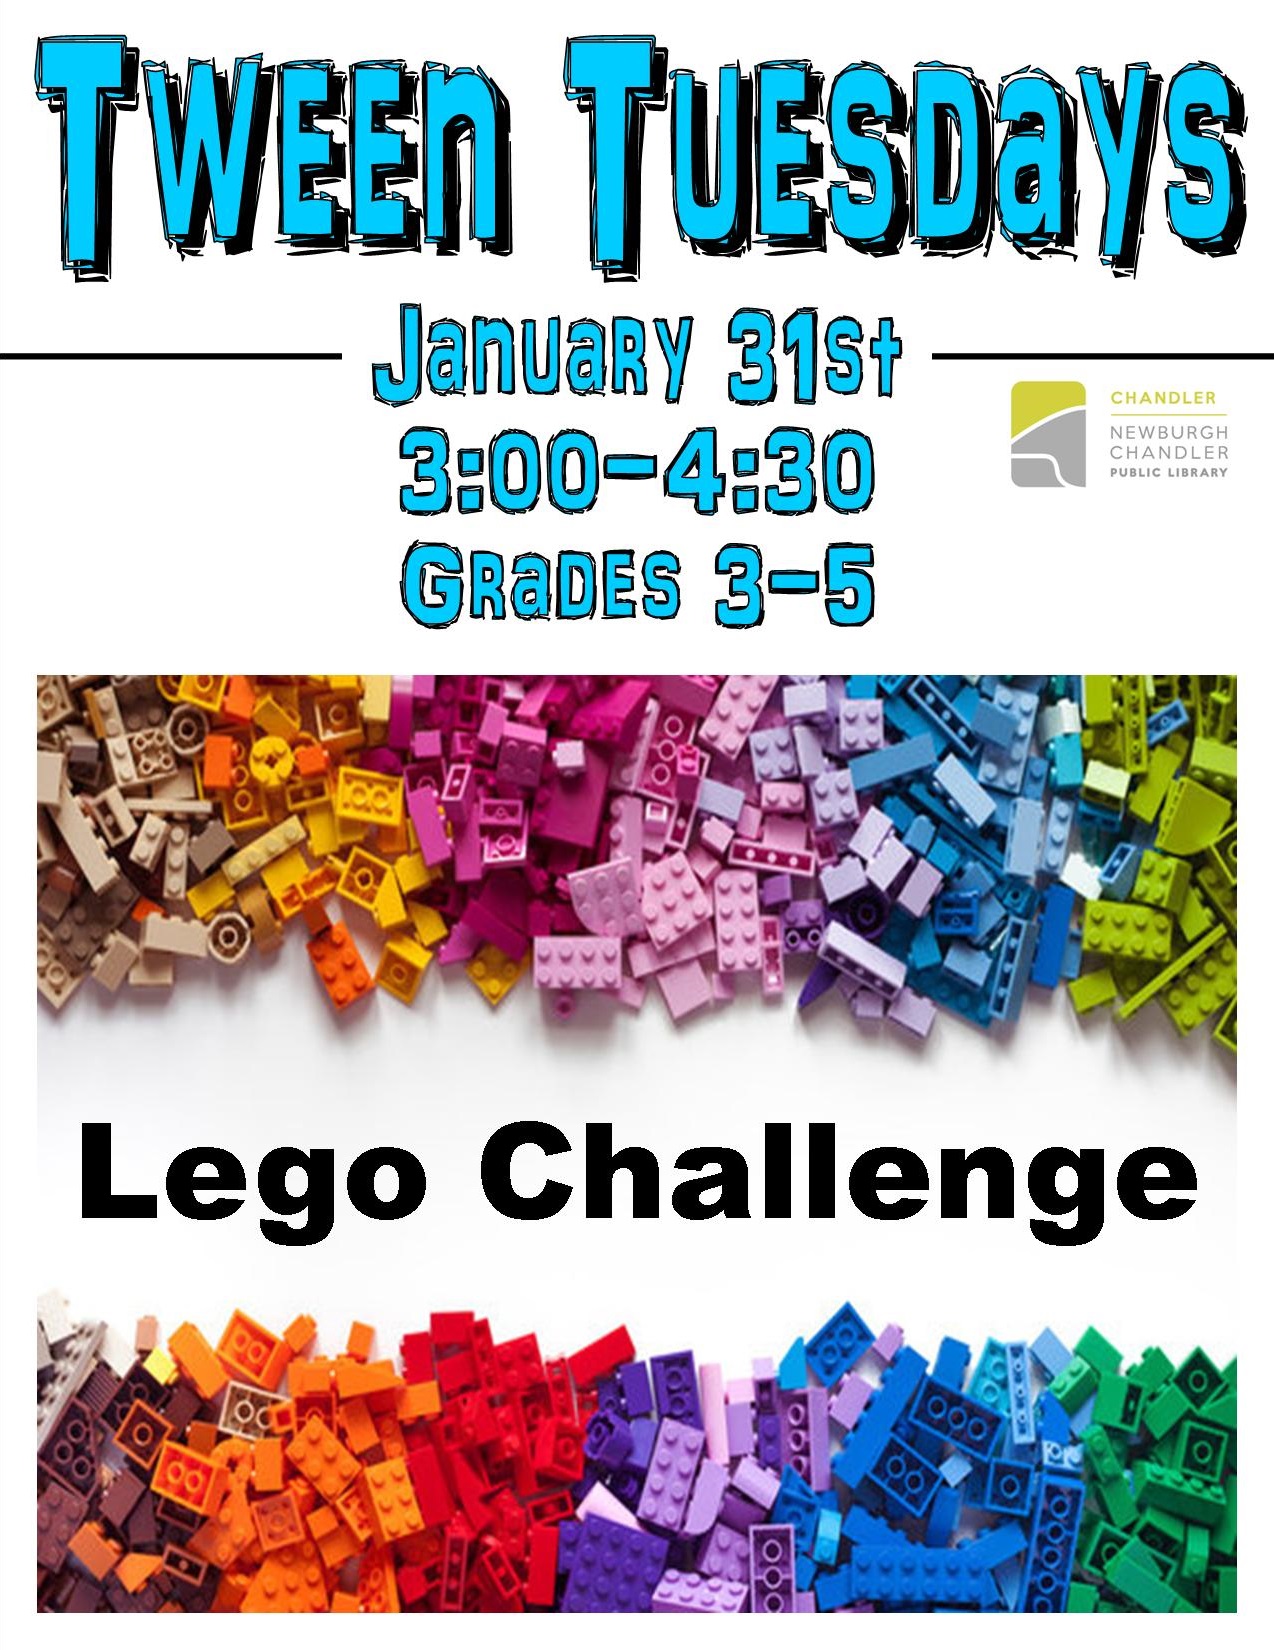 Tween Tuesdays: Lego Challenge @ Chandler Library Children's Department | Chandler | Indiana | United States